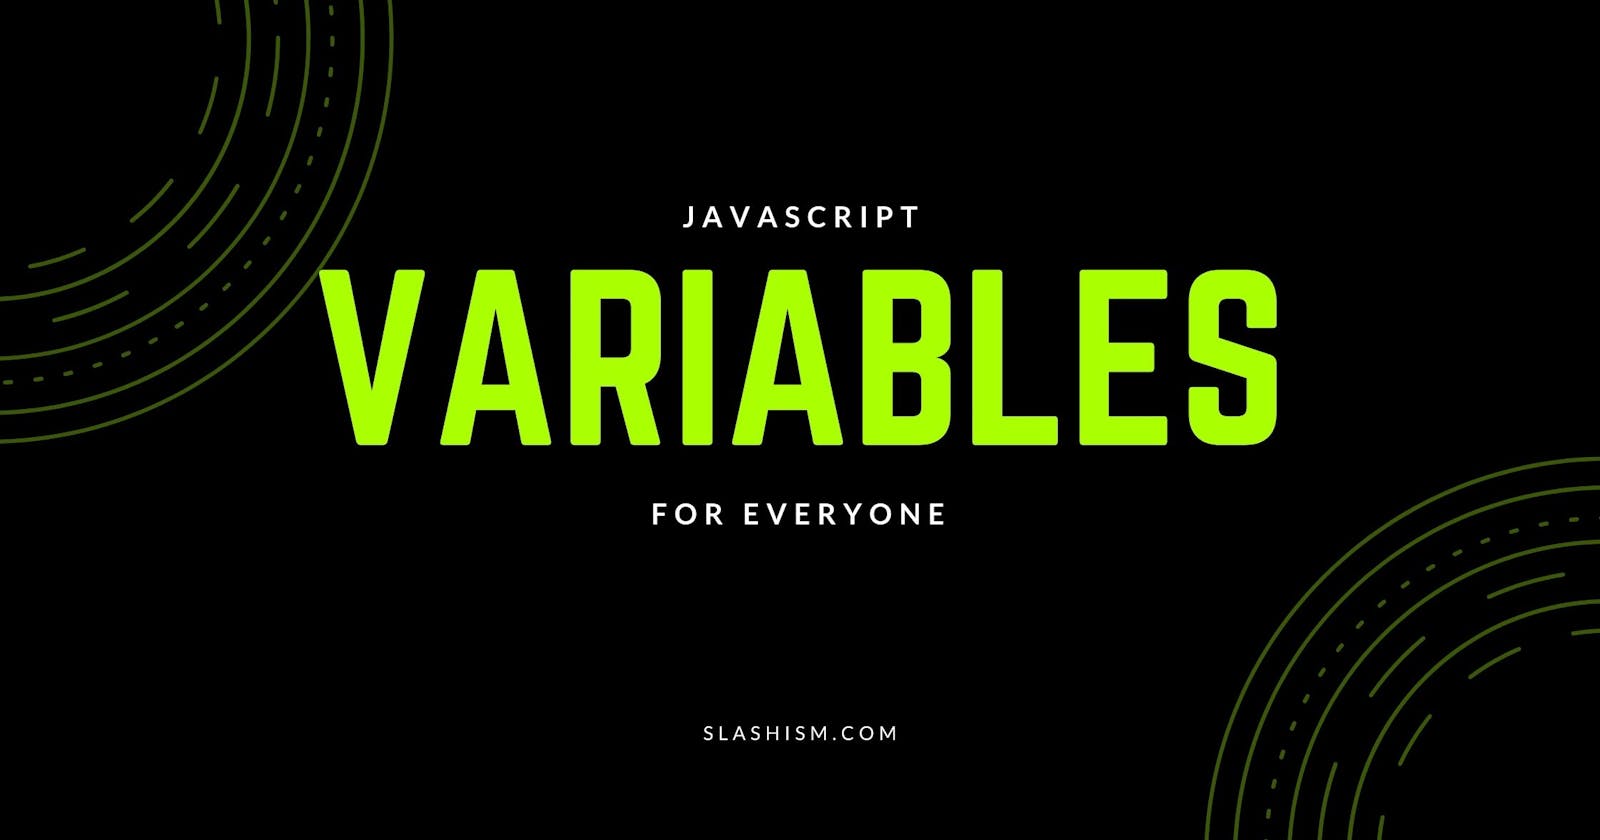 Variable Declaration in Javascript for Beginners